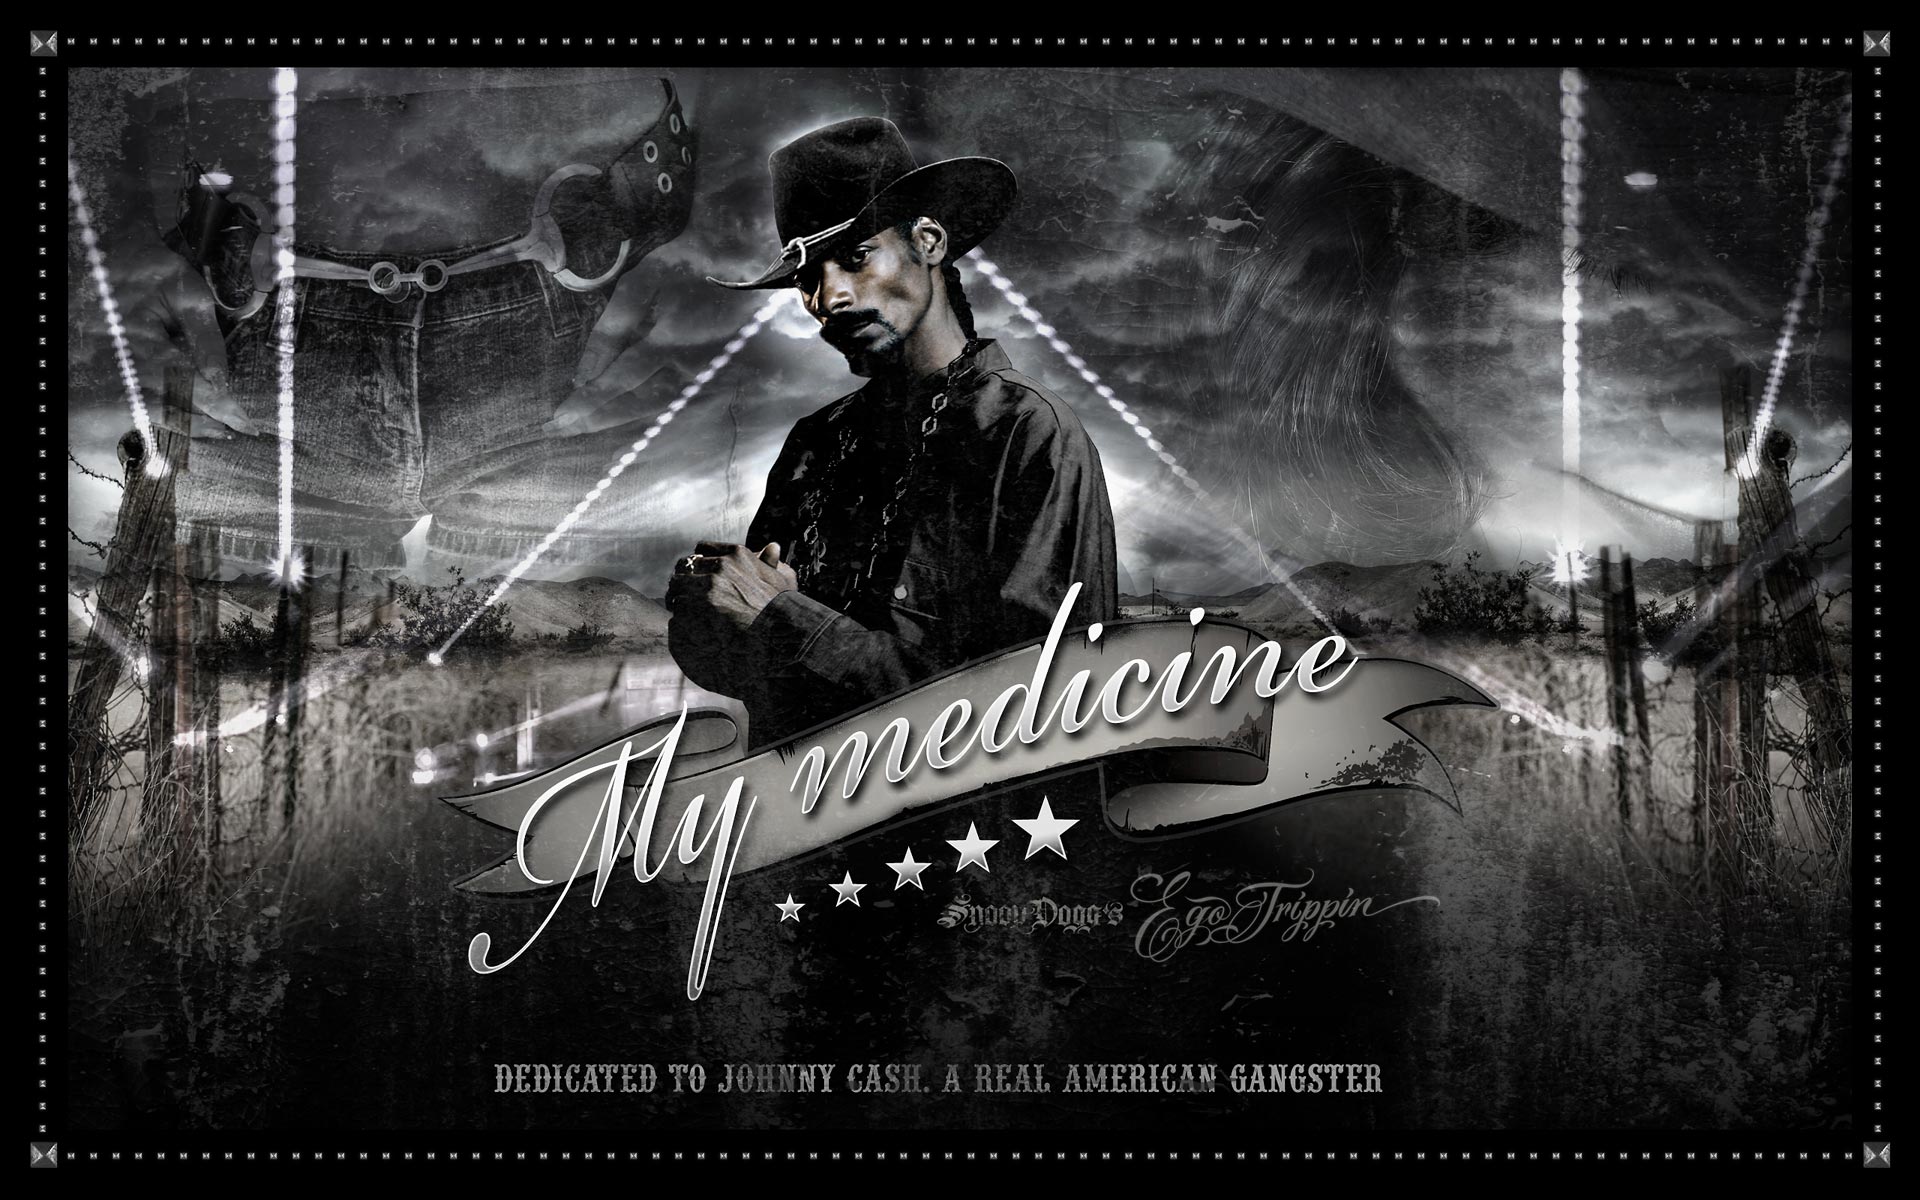 Music Snoop Dogg HD Wallpaper | Background Image